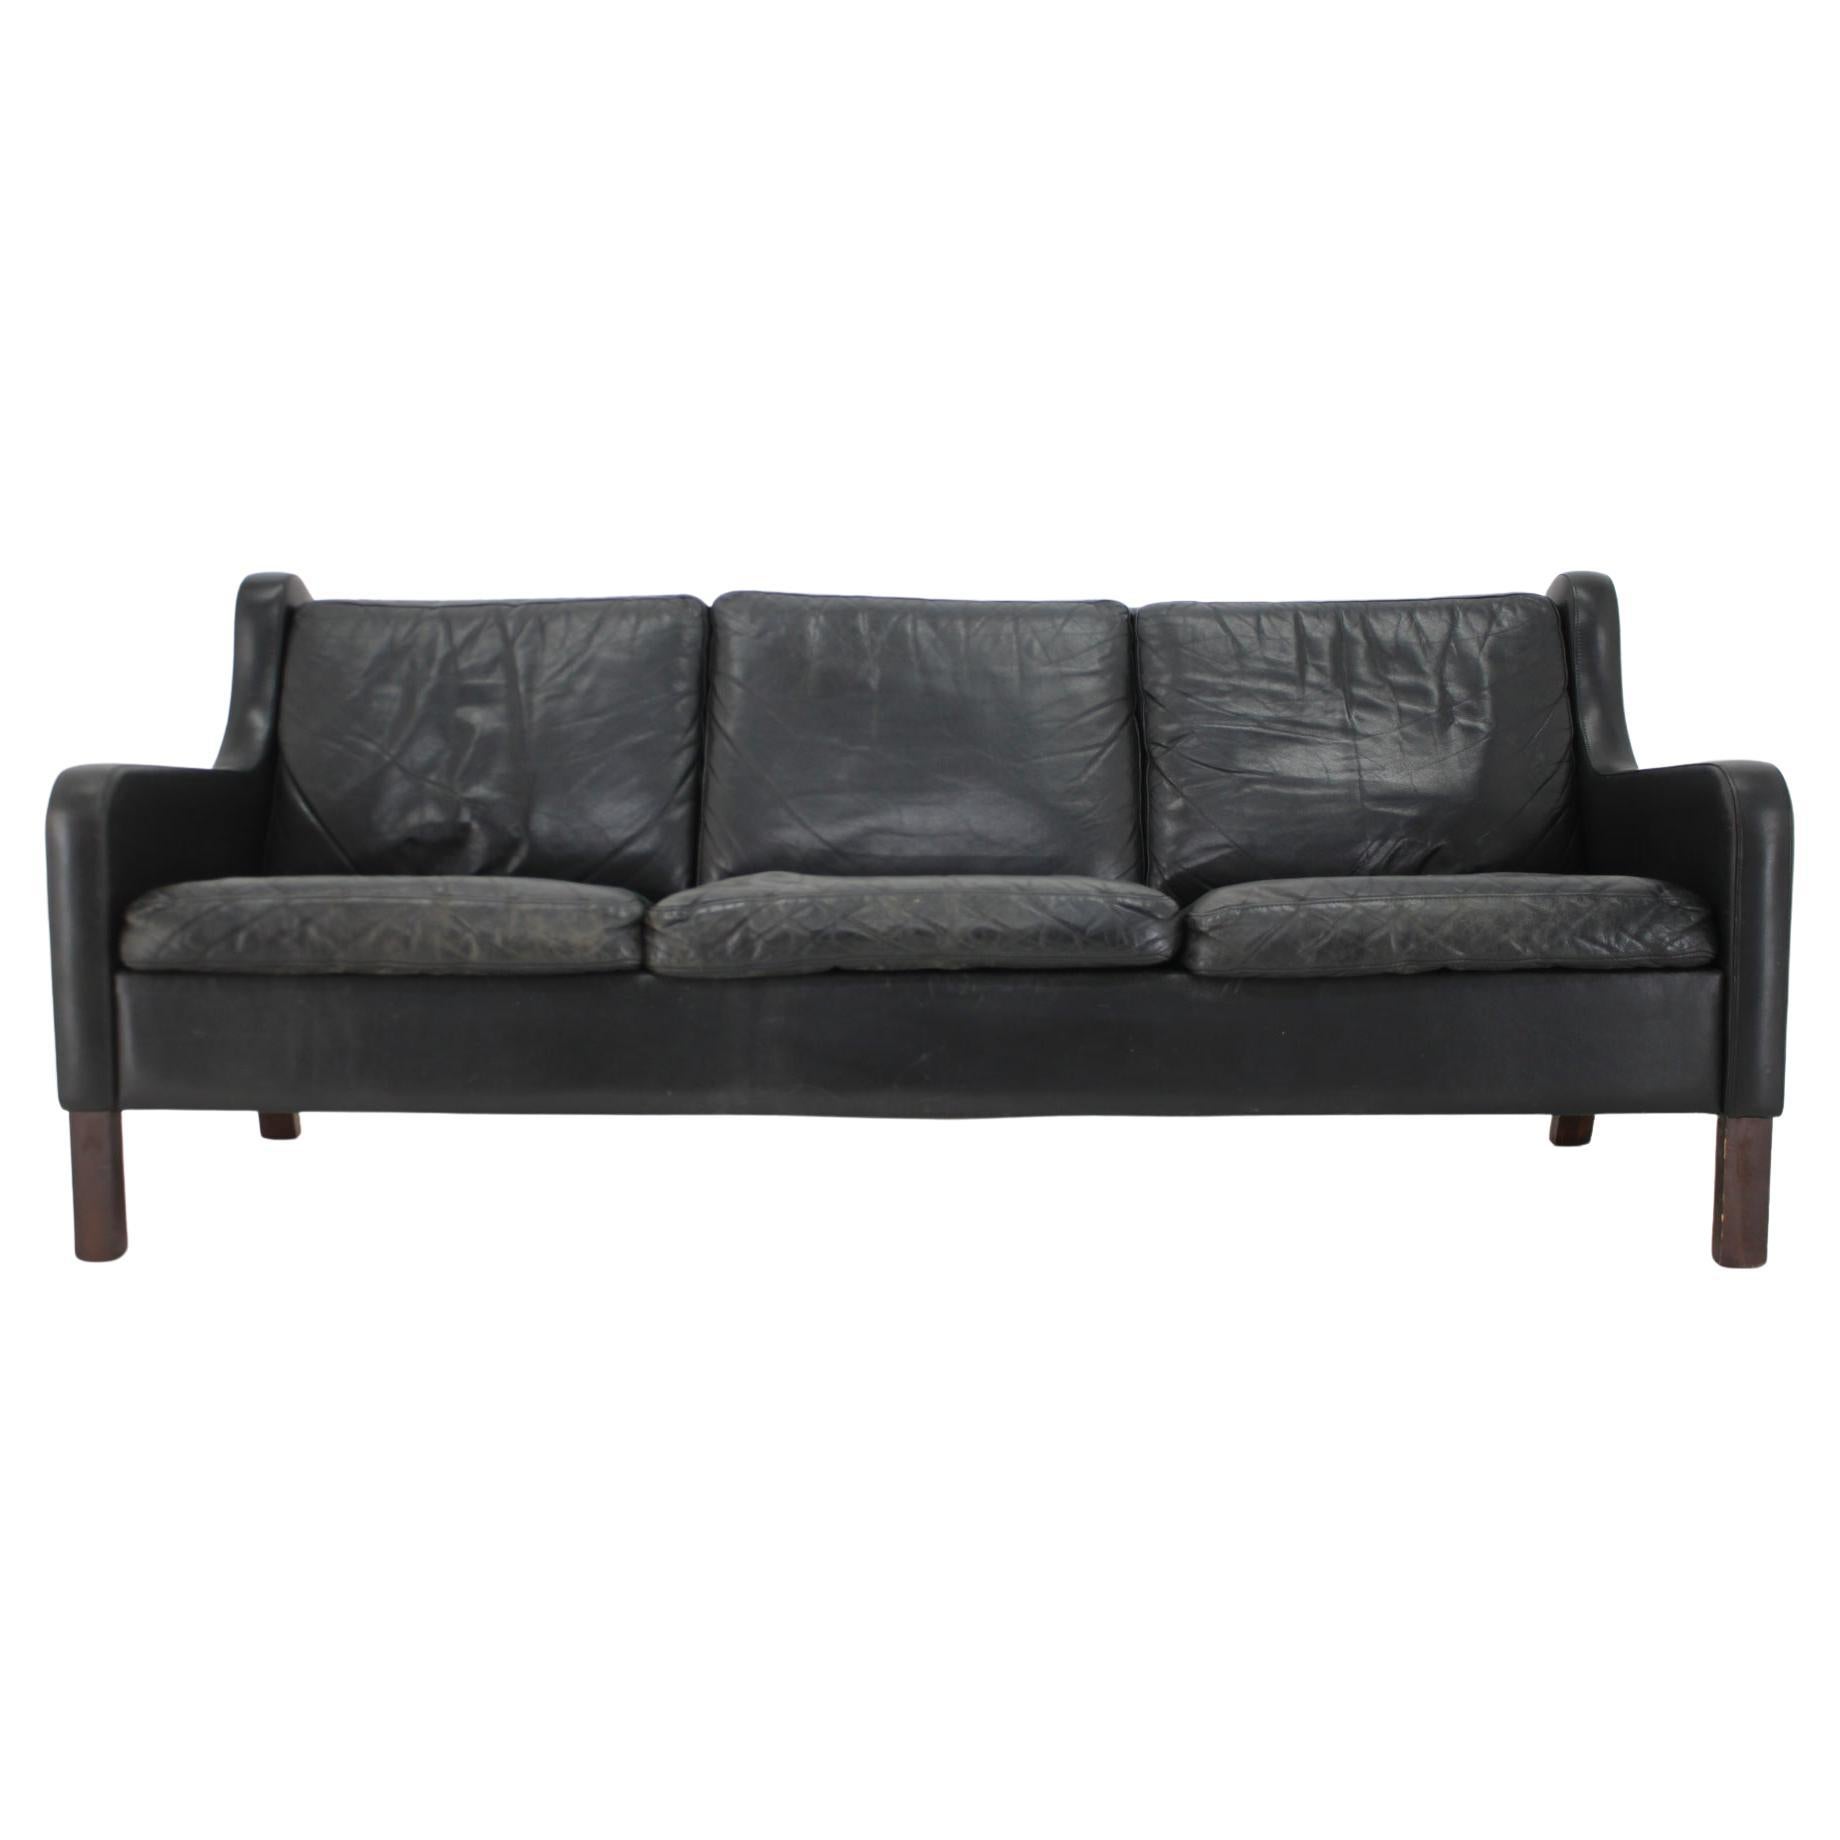 1970s Danish Black Leather 3-Seater Sofa